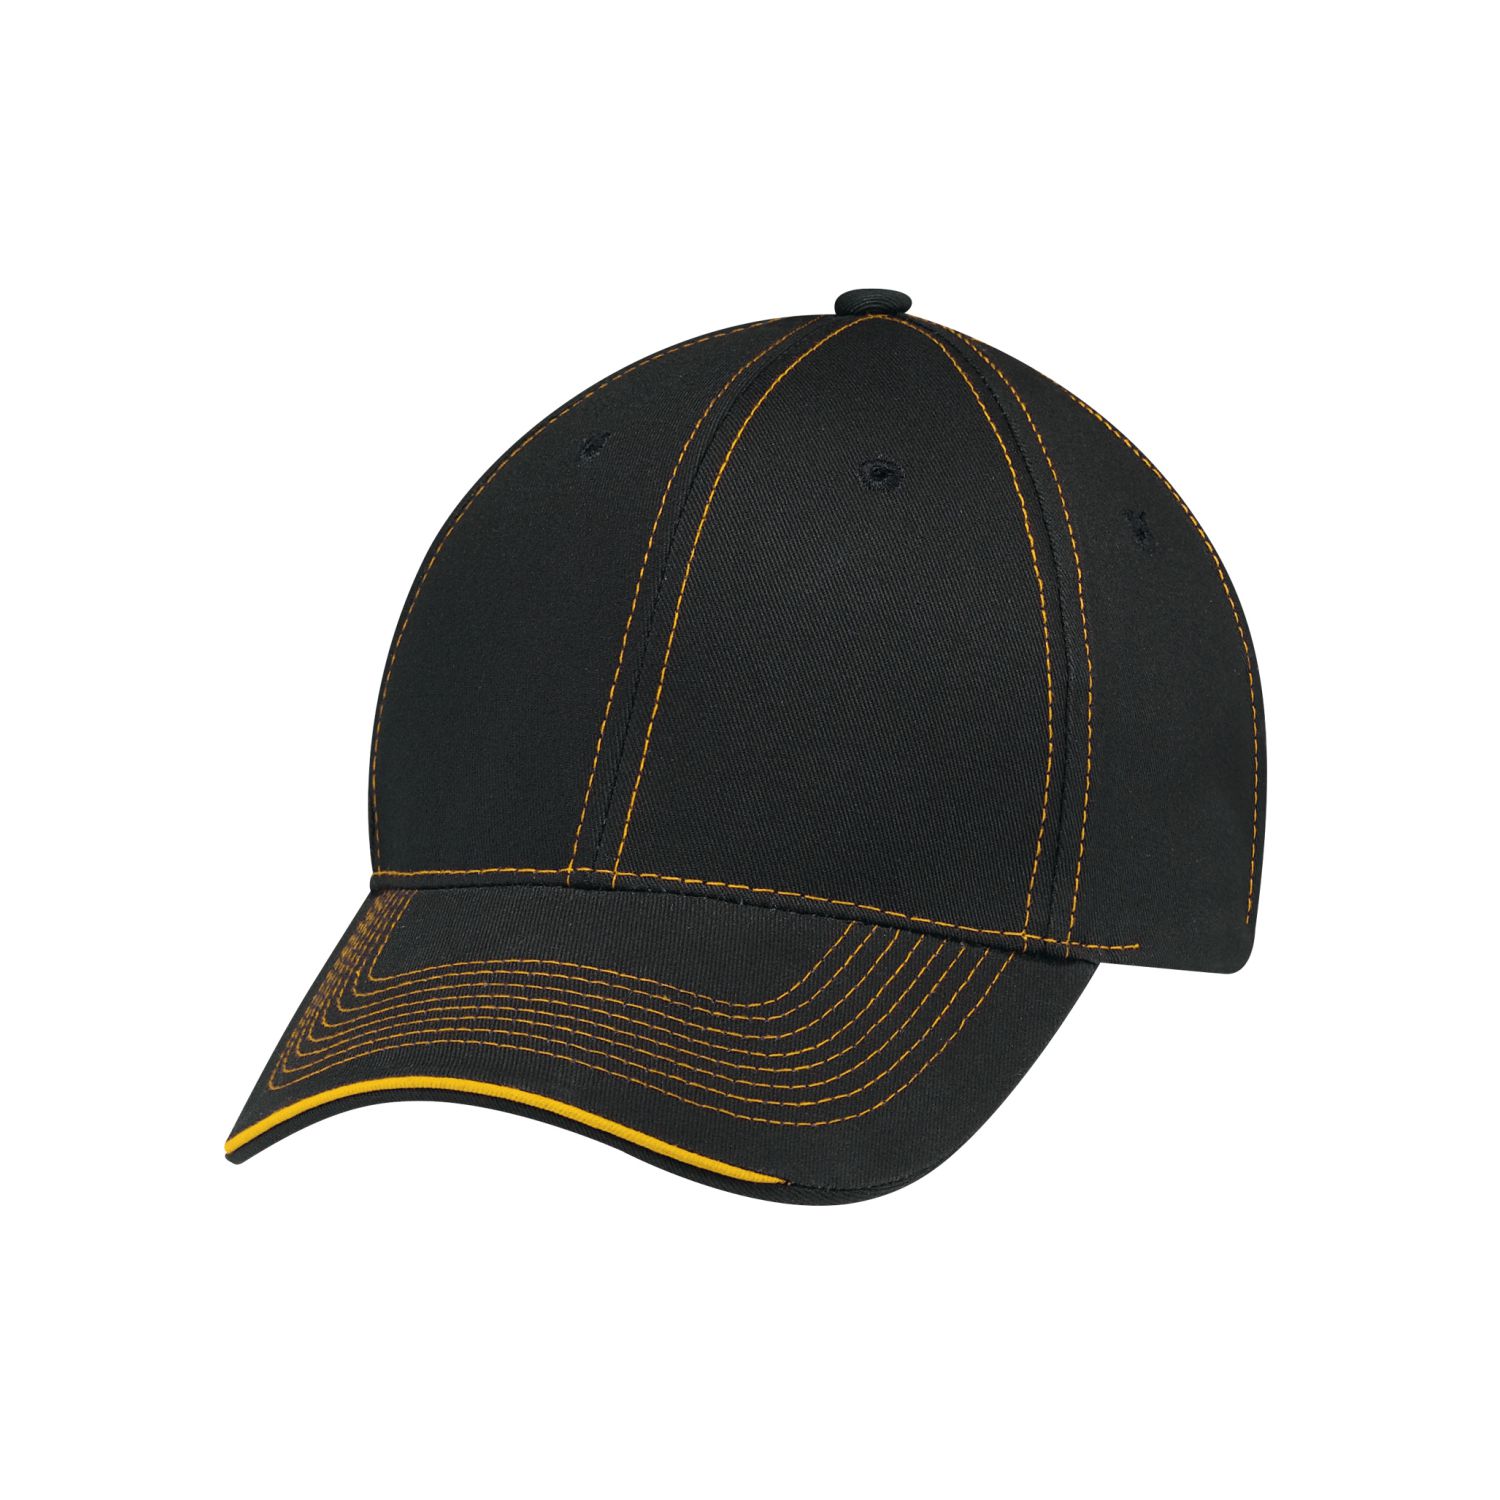 AJM 6-Panel Constructed Full-Fit Hat #6F617M Black / Gold